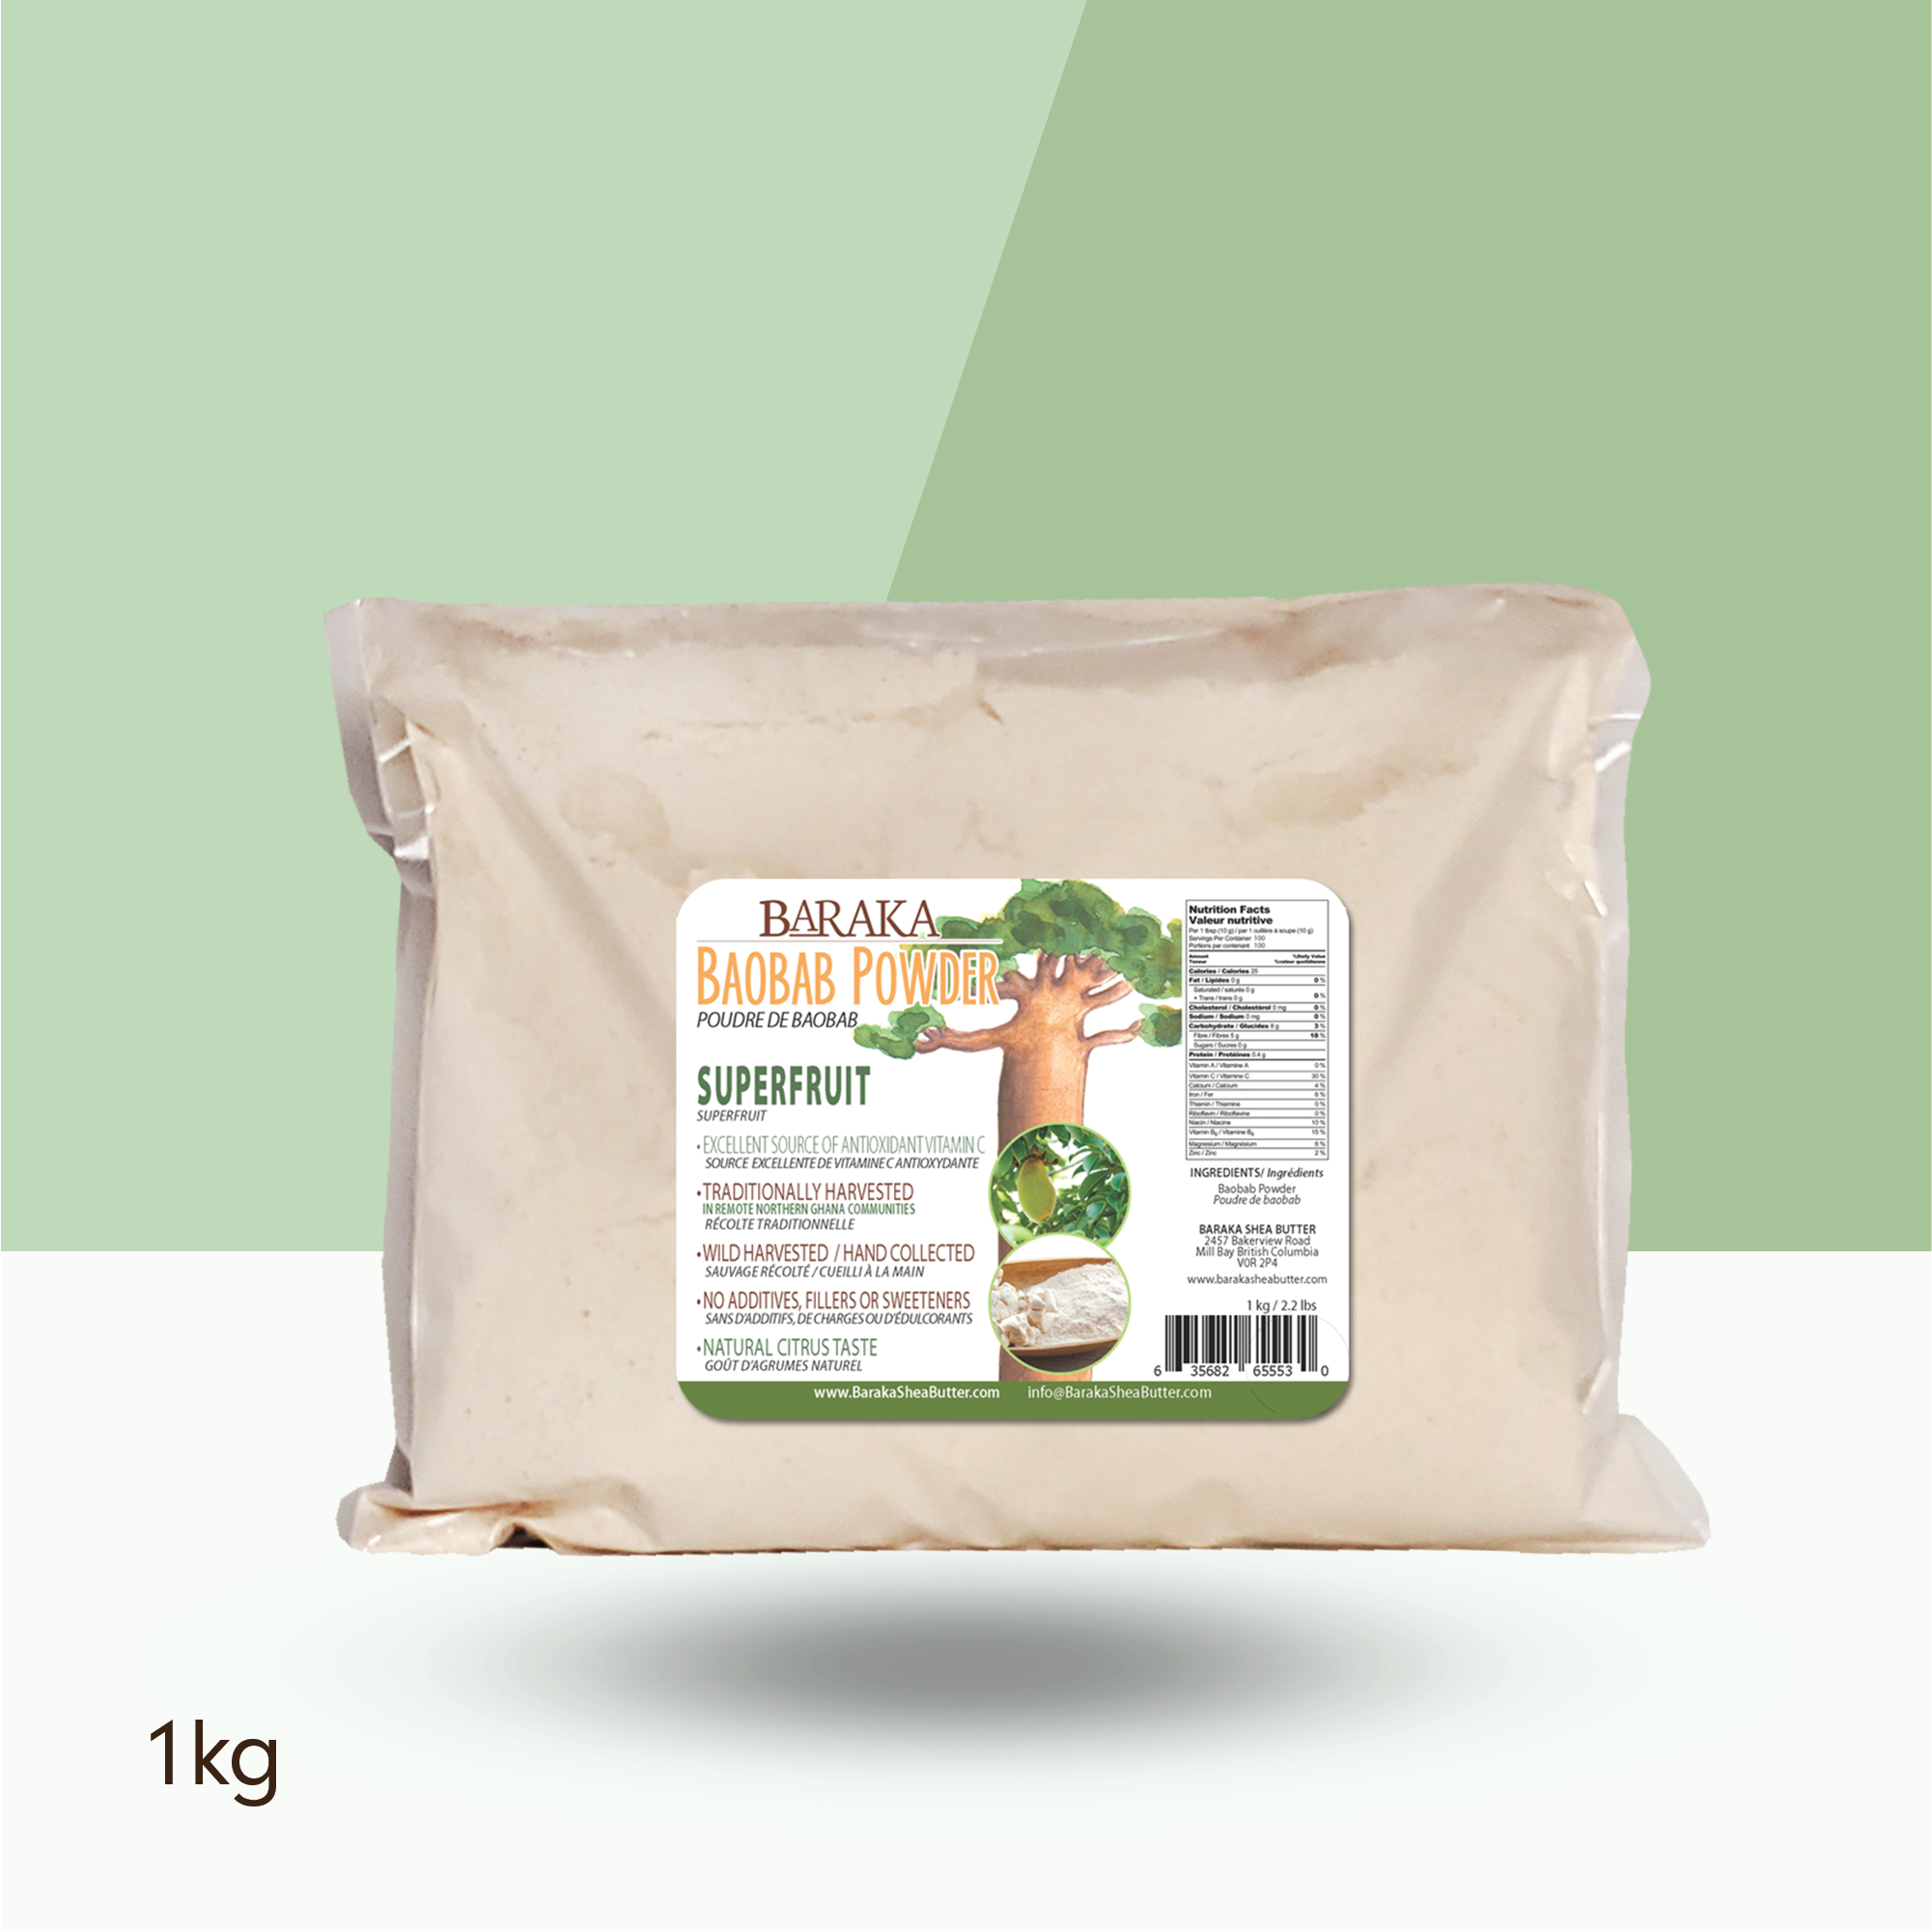 Baraka Baobab Powder 2.2 lb / 1 kg